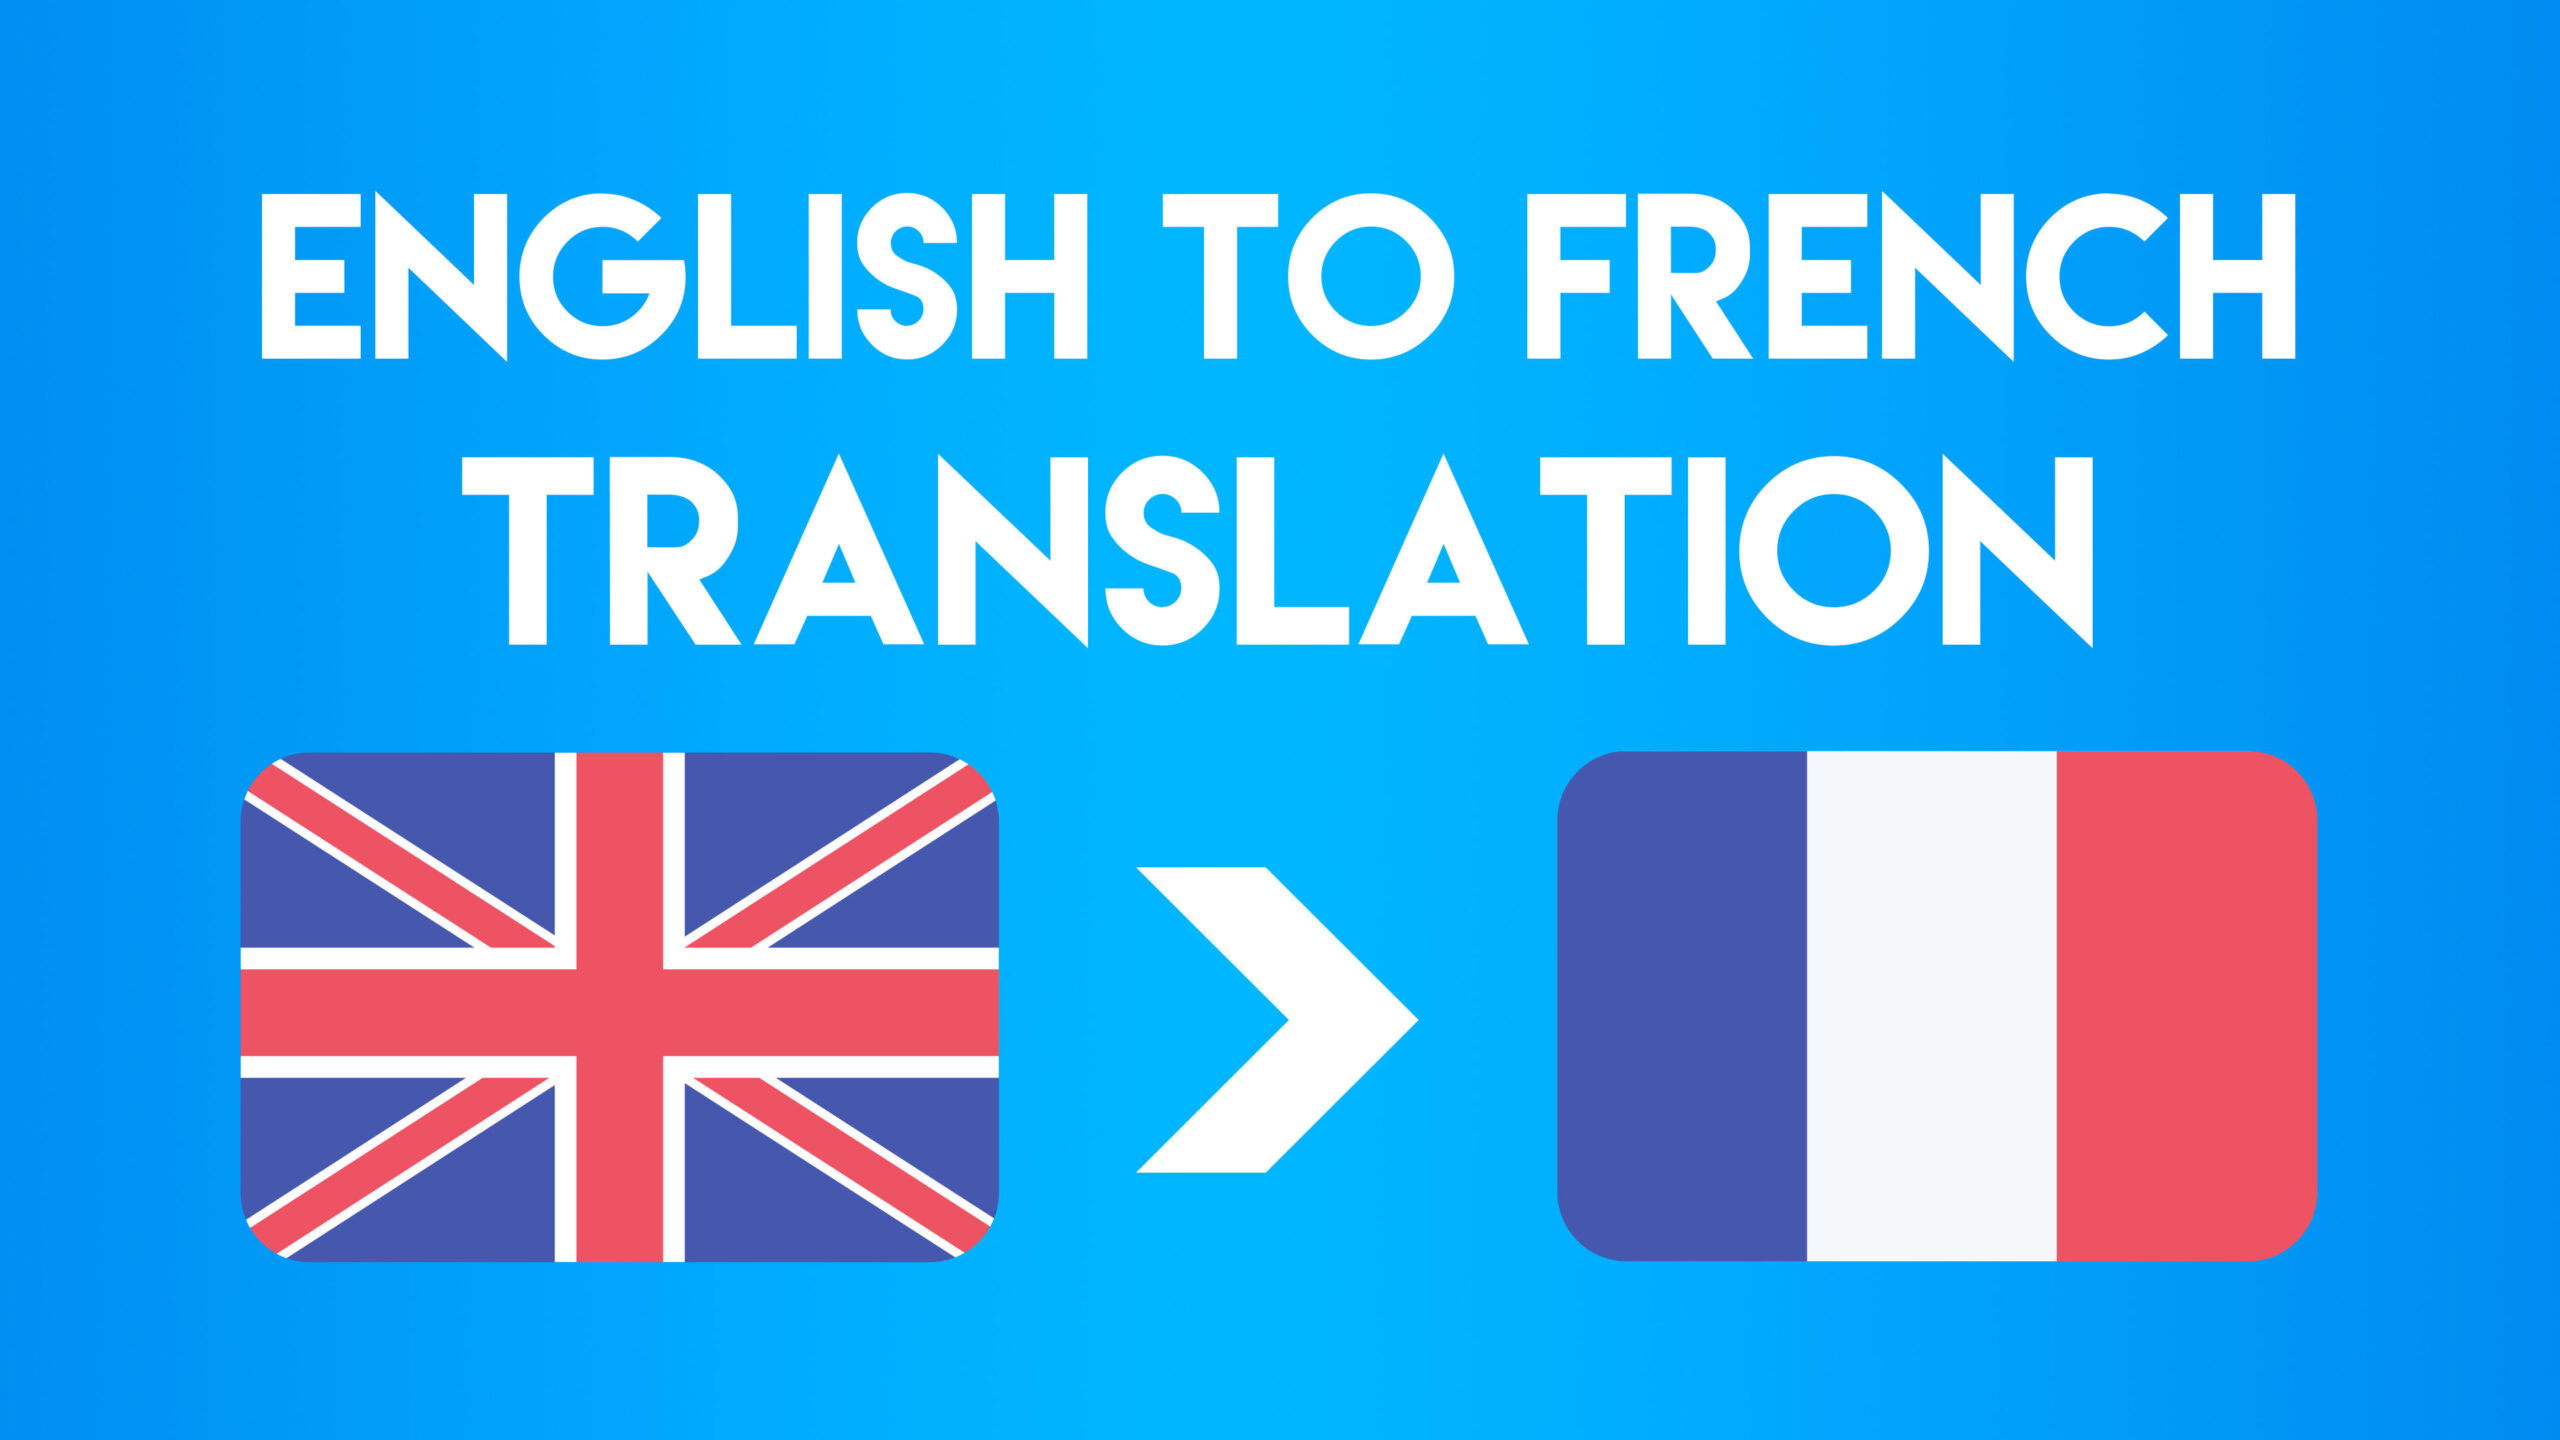 39982English-French or French-English translation.